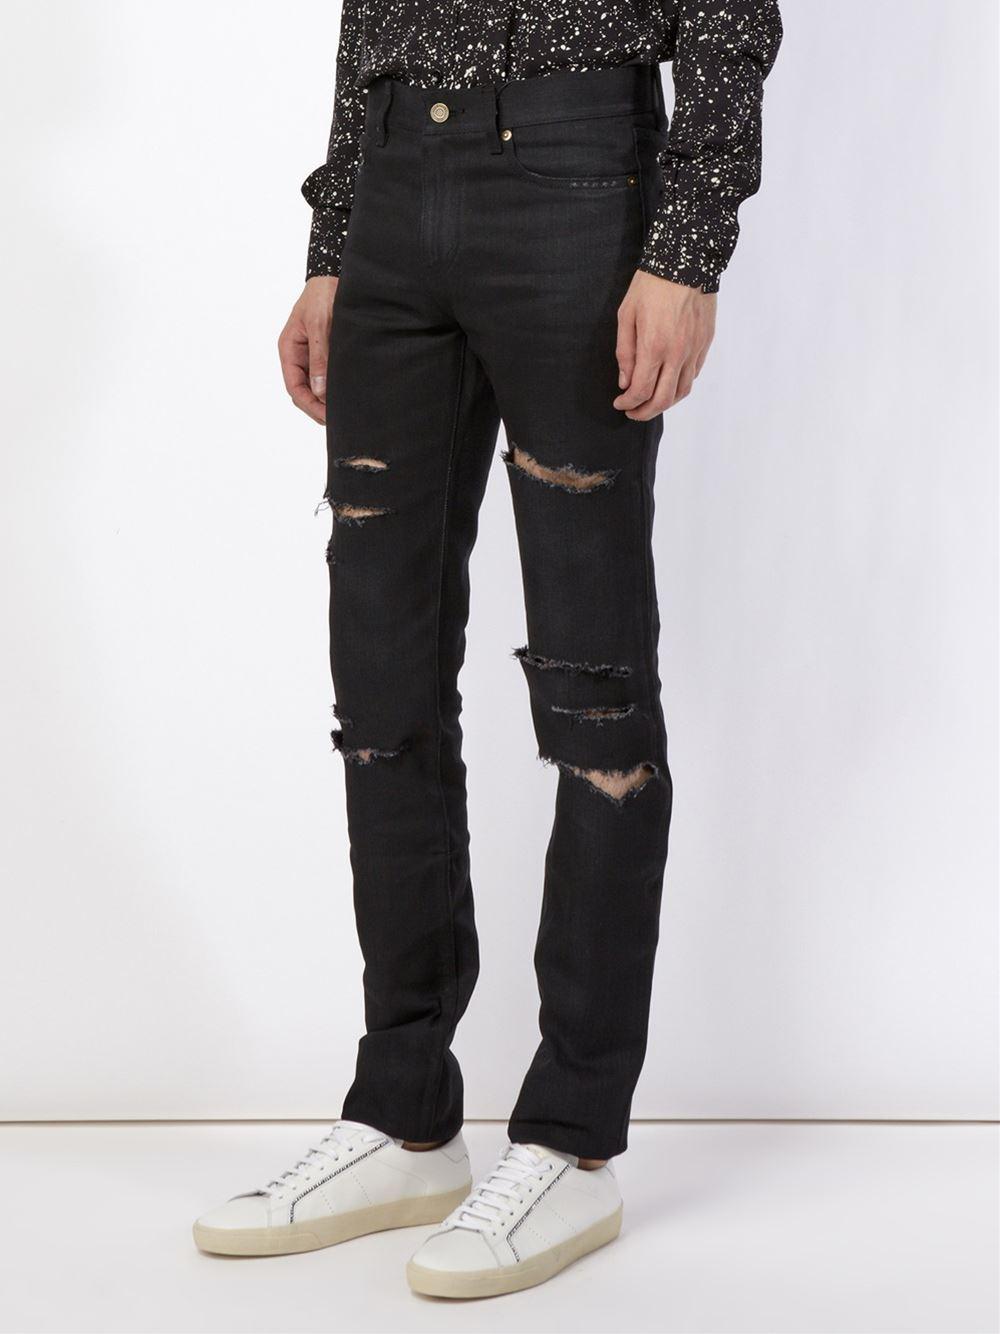 Saint Laurent Ripped Jeans in Black for Men - Lyst